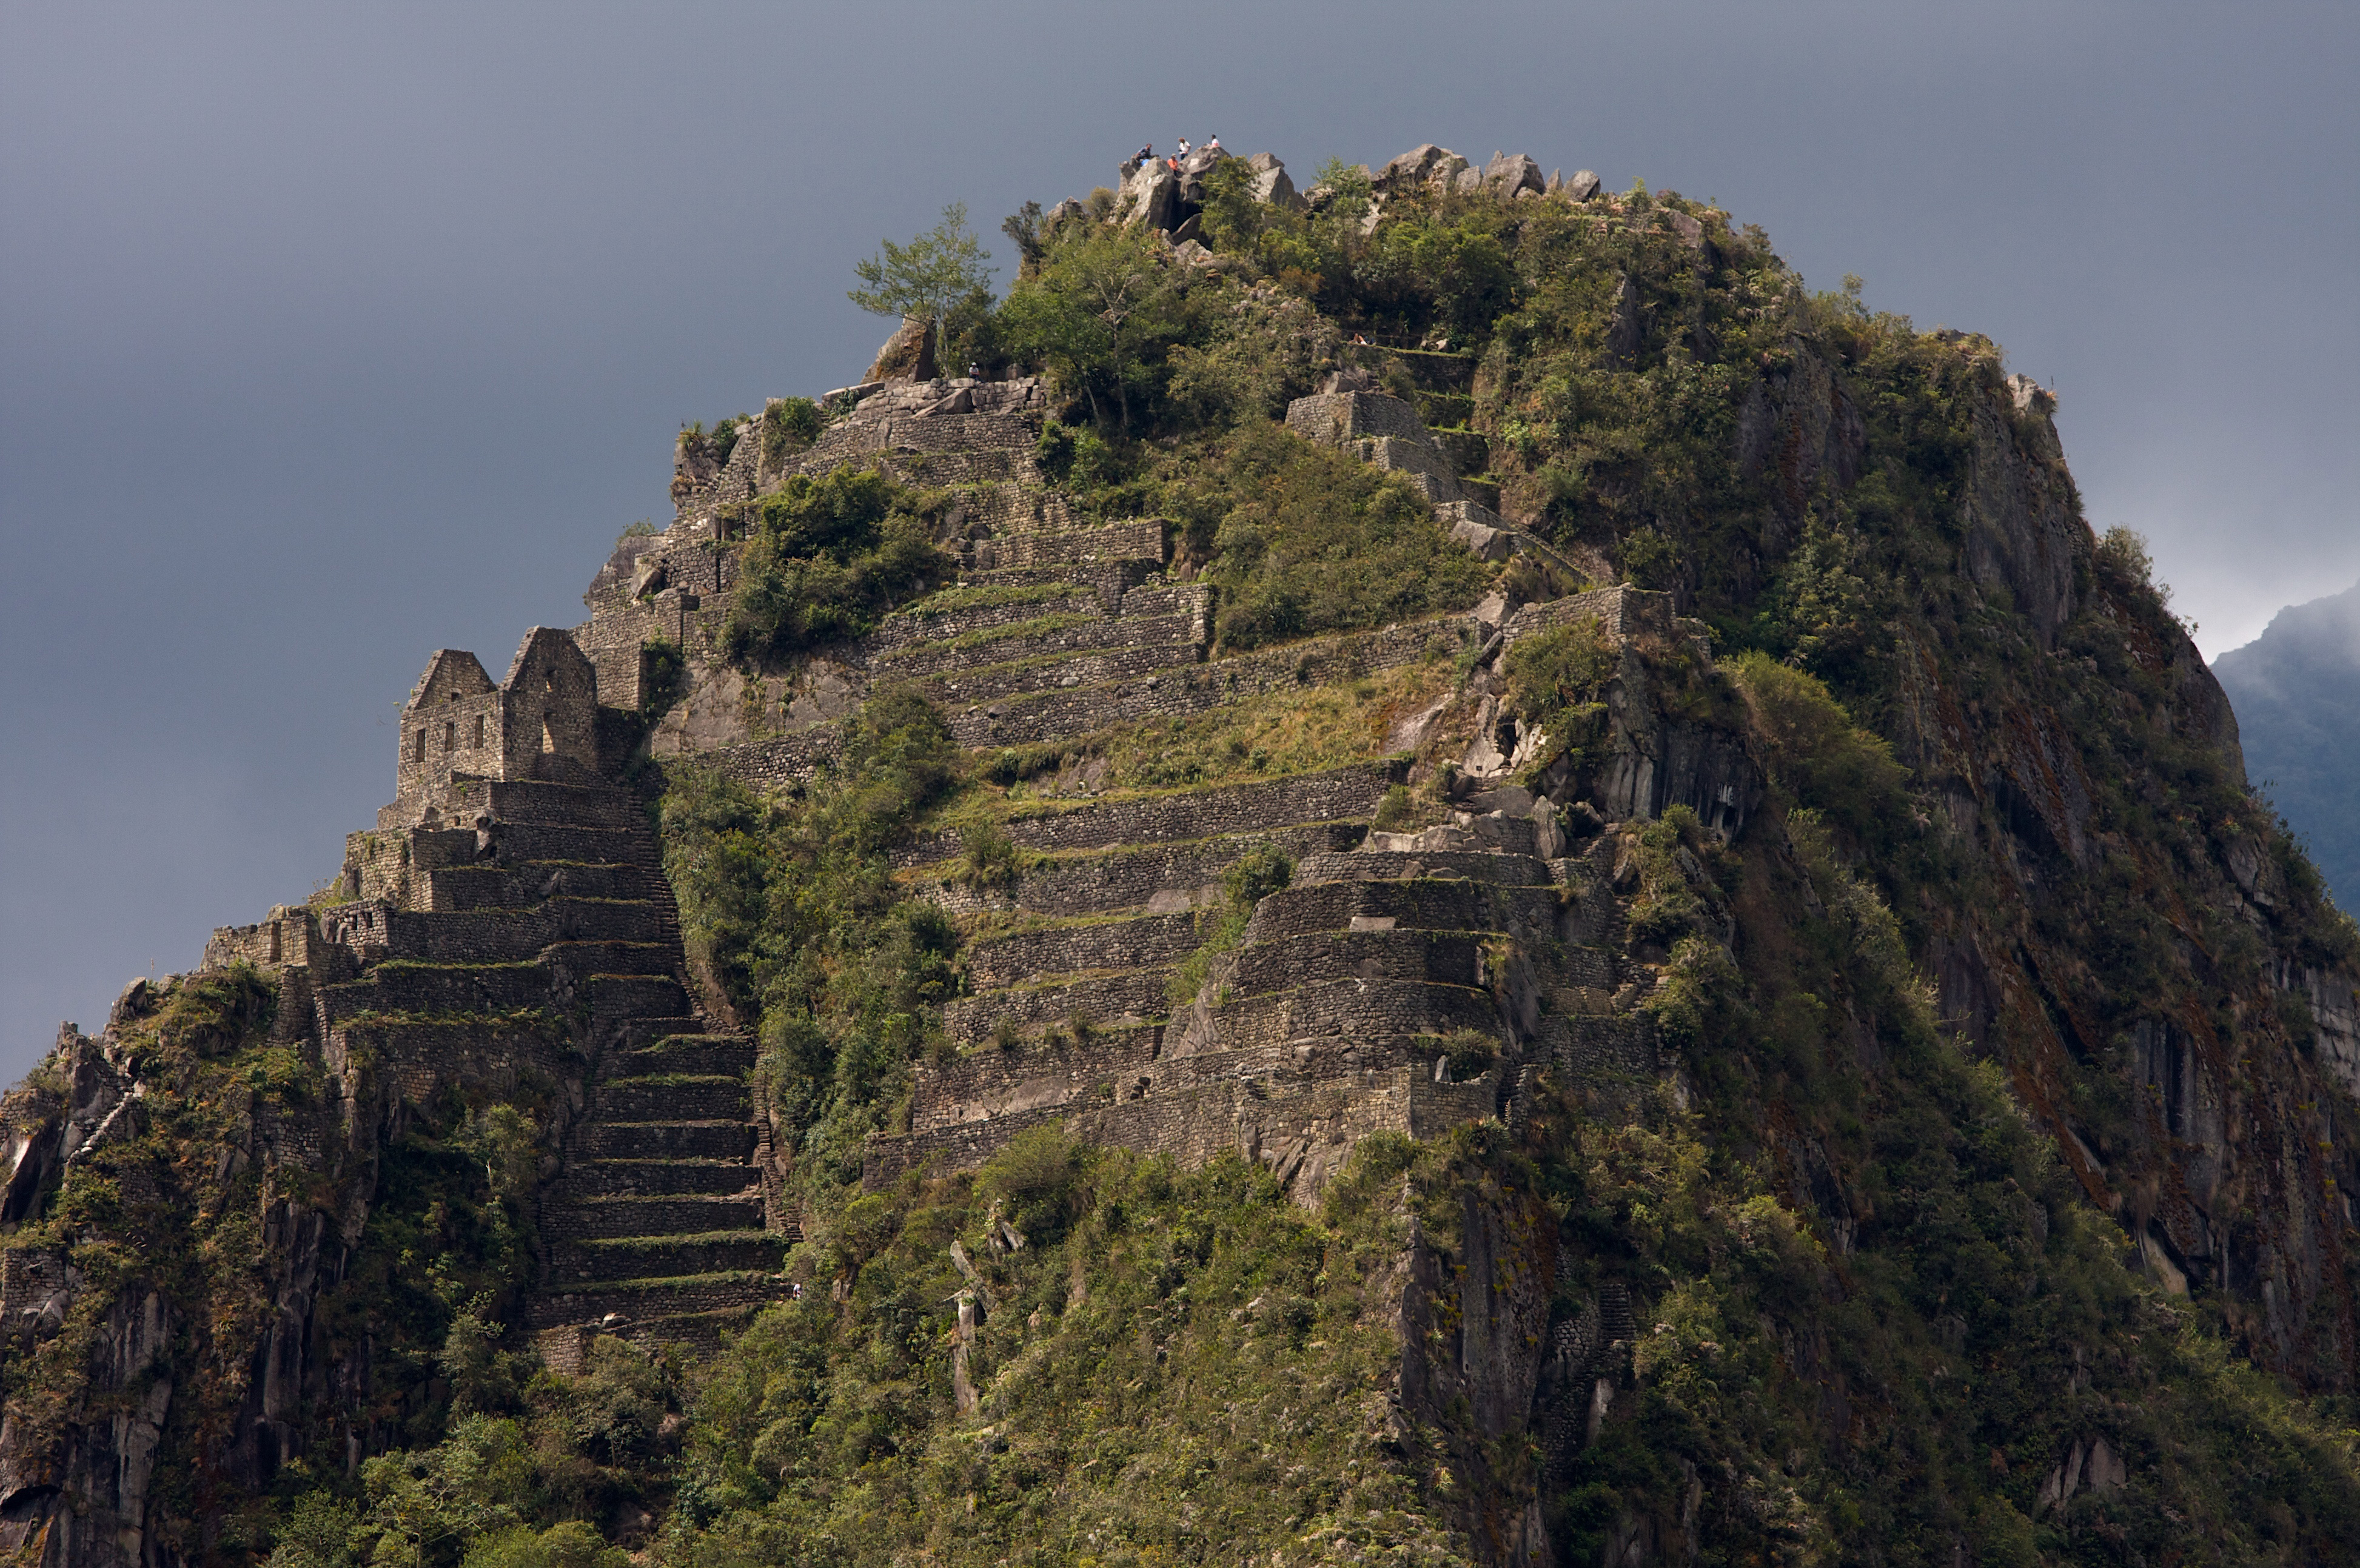 Hiram Bingham III re-discovers Machu Picchu, 'the Lost City of the Incas'